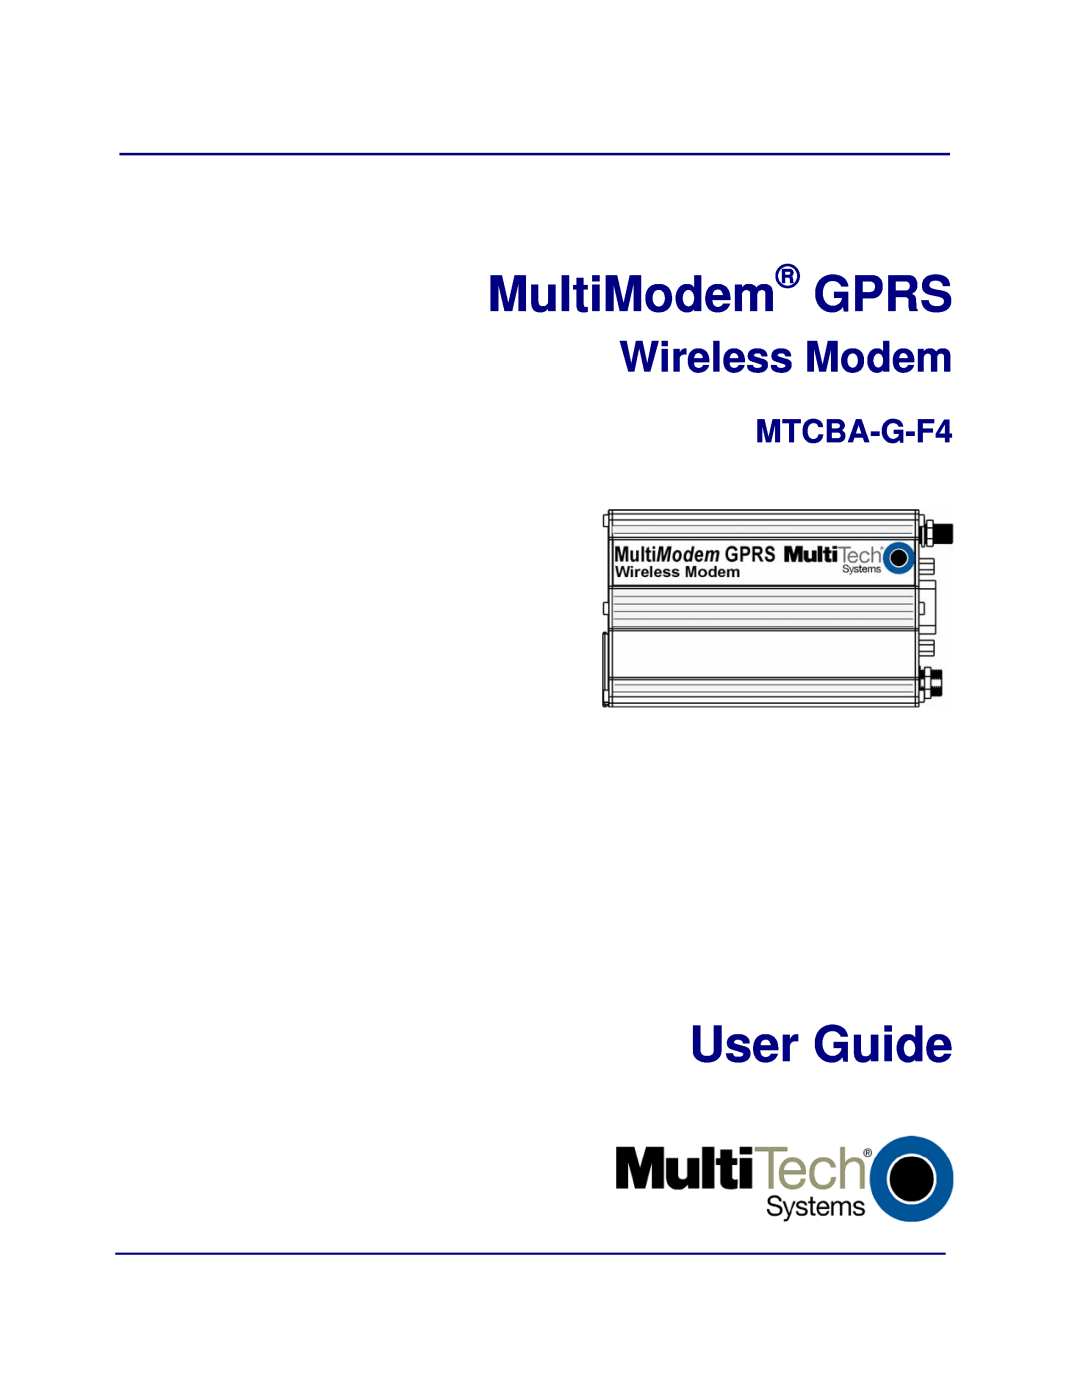 Multi-Tech Systems MTCBA-G-F4 manual MultiModem GPRS, User Guide, Wireless Modem 